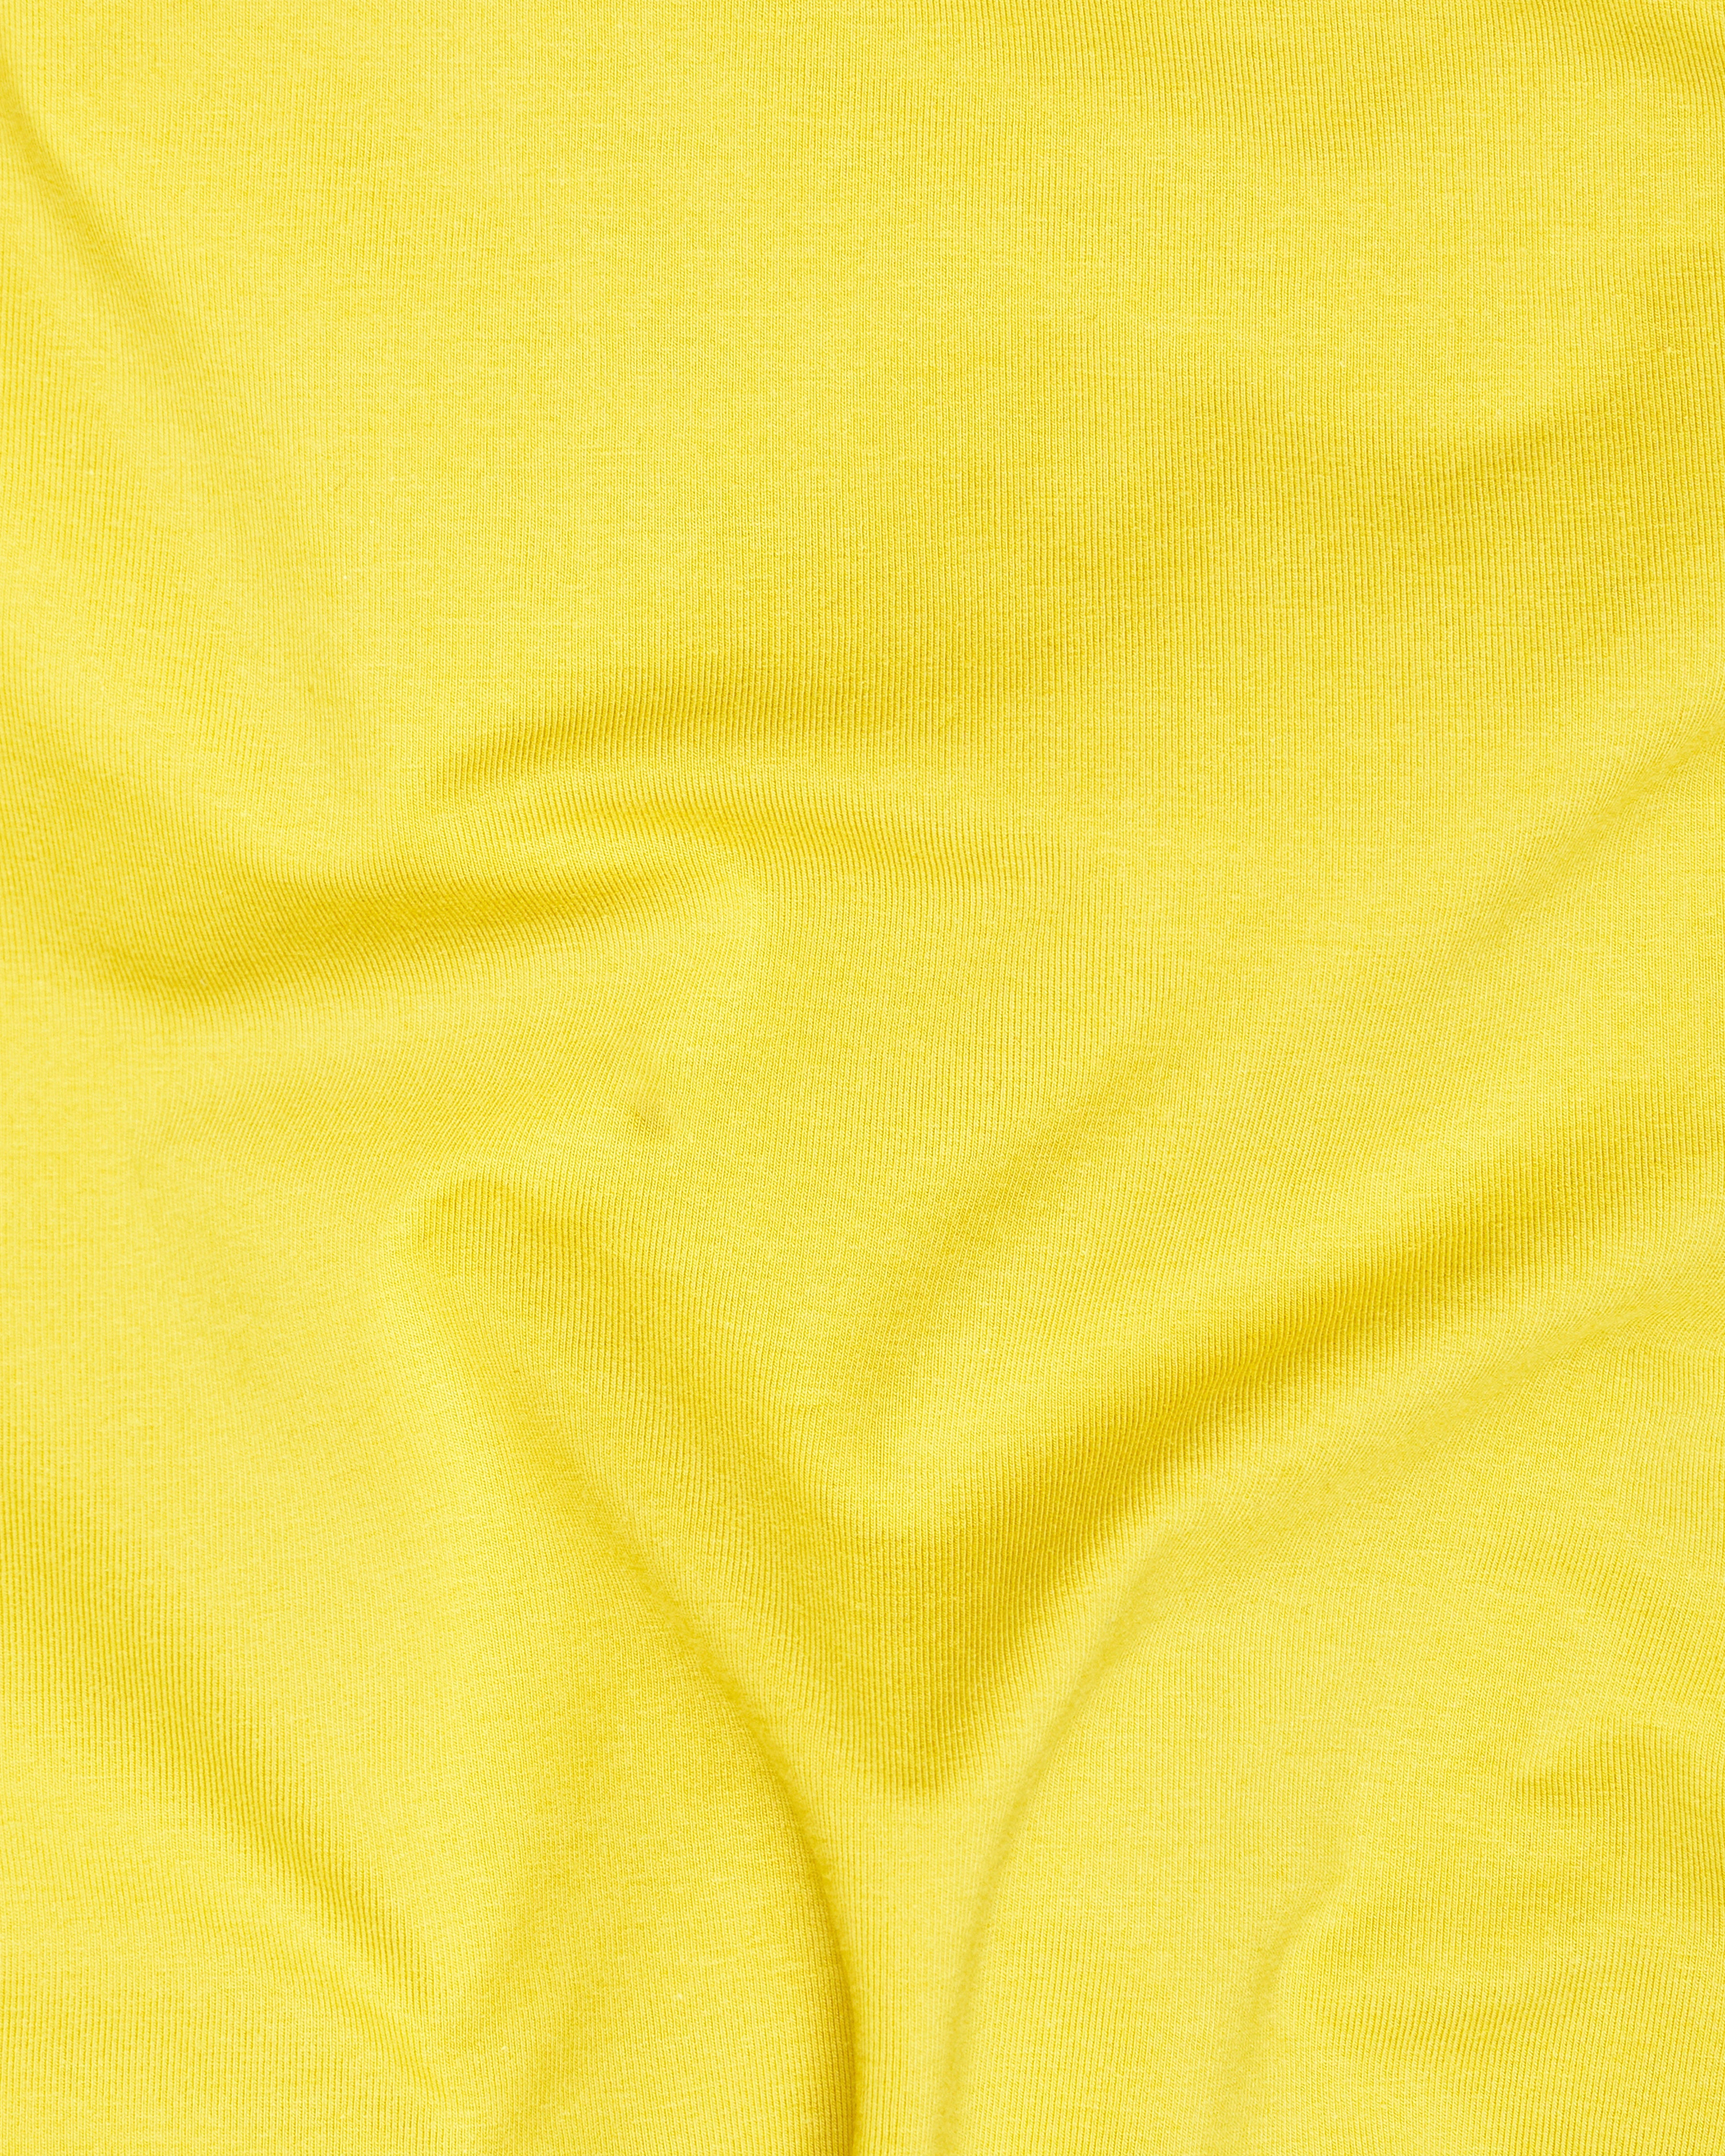 Dandelion Yellow Organic Cotton Pique Polo TS858-S, TS858-M, TS858-L, TS858-XL, TS858-XXL